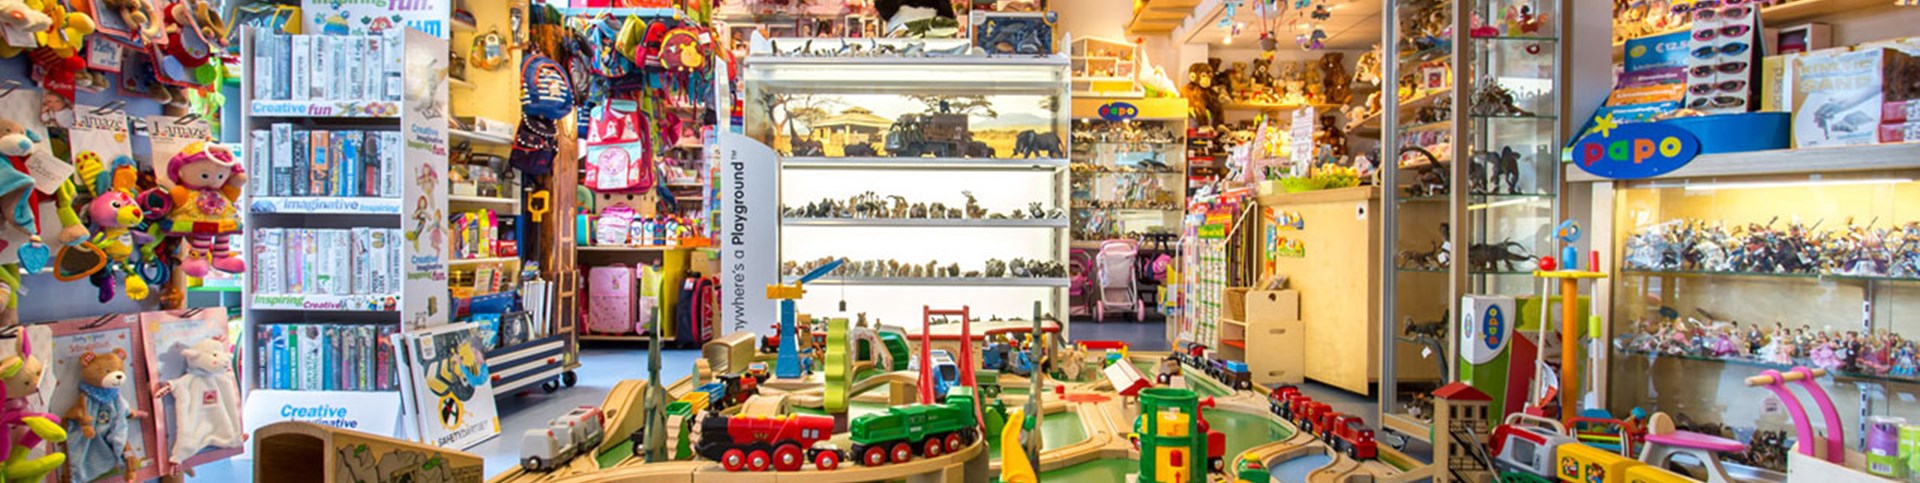 Speelgoedwinkel Zuid | Gelderlandplein